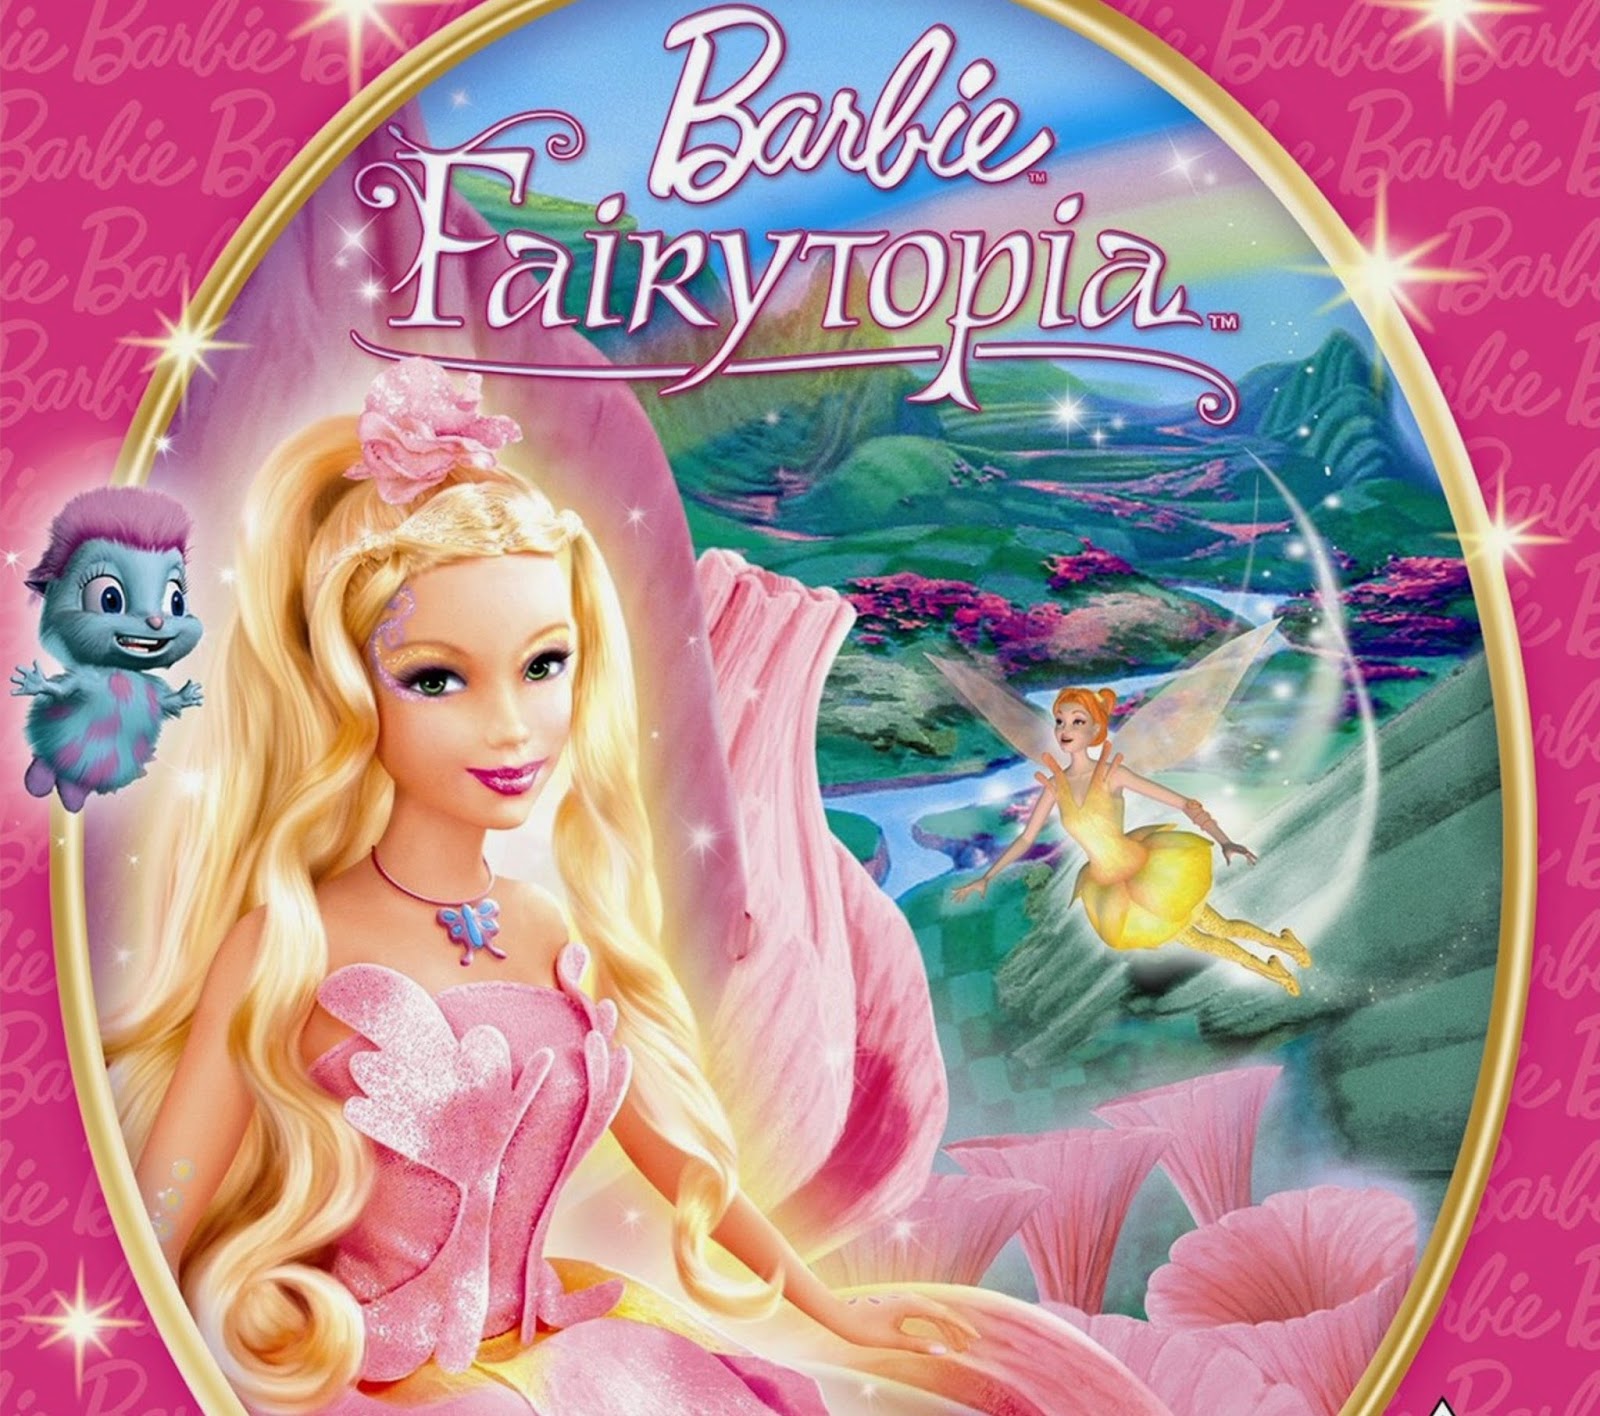 Barbie Fairytopia (2005) Movie Online